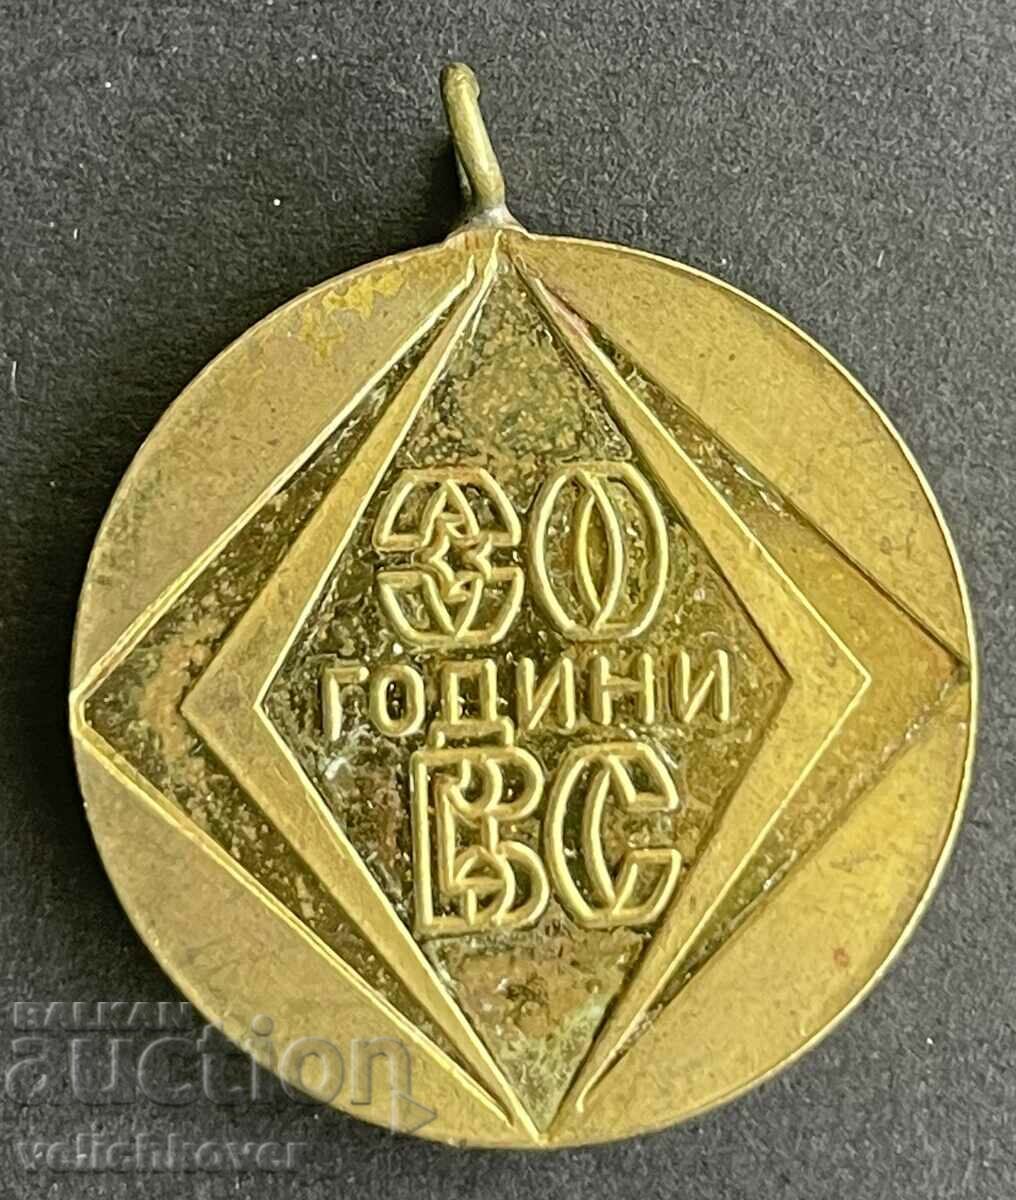 36026 България медал 30г. Вторични суровини 1978г.